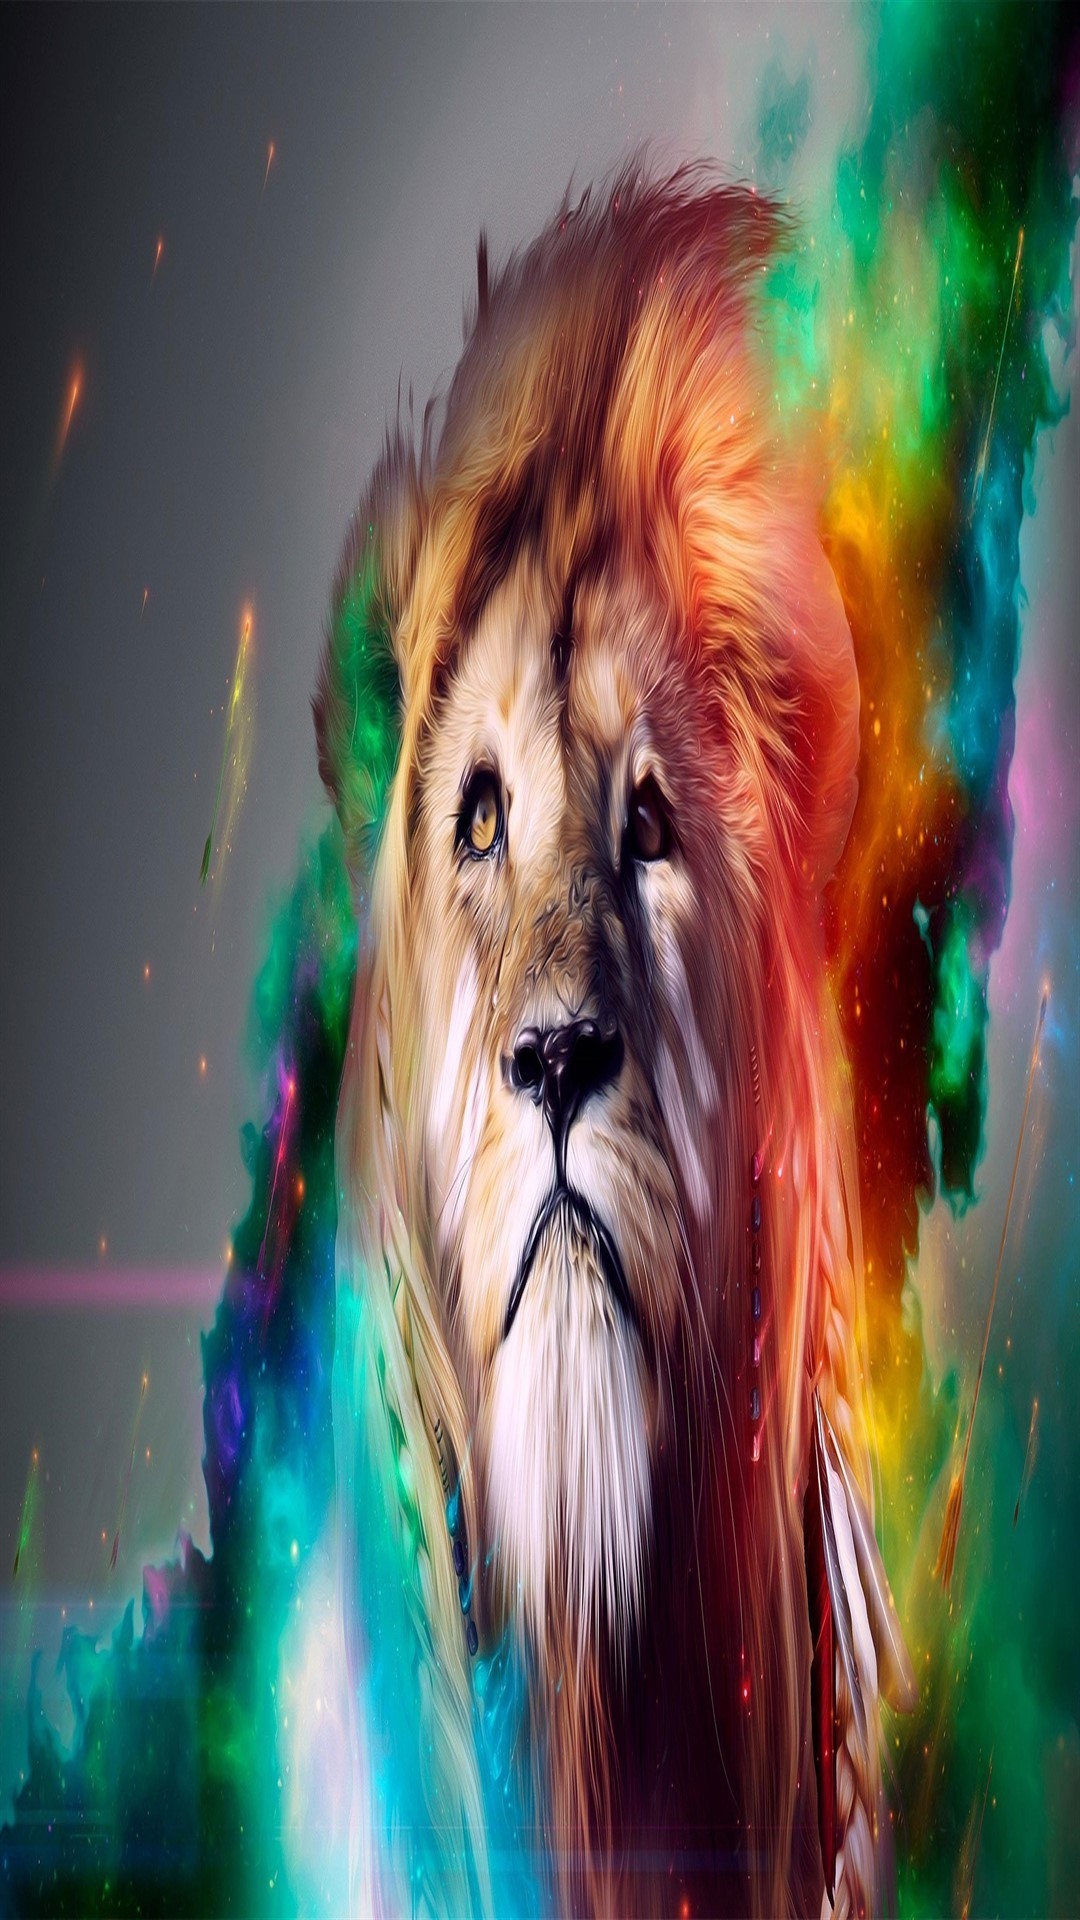 1080x1920 Amazing Lion Wallpaper Lovely Lion Wallpaper Hd Backgrounds Images Clayton  Bush 2017 03 14